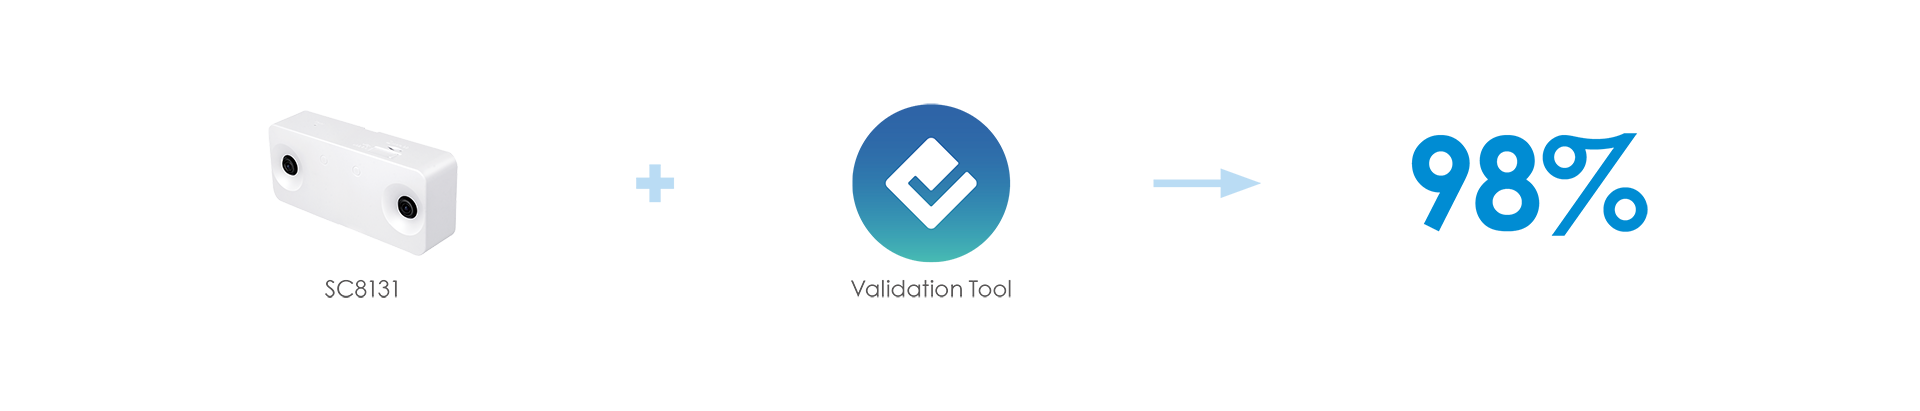 Validation_Tool